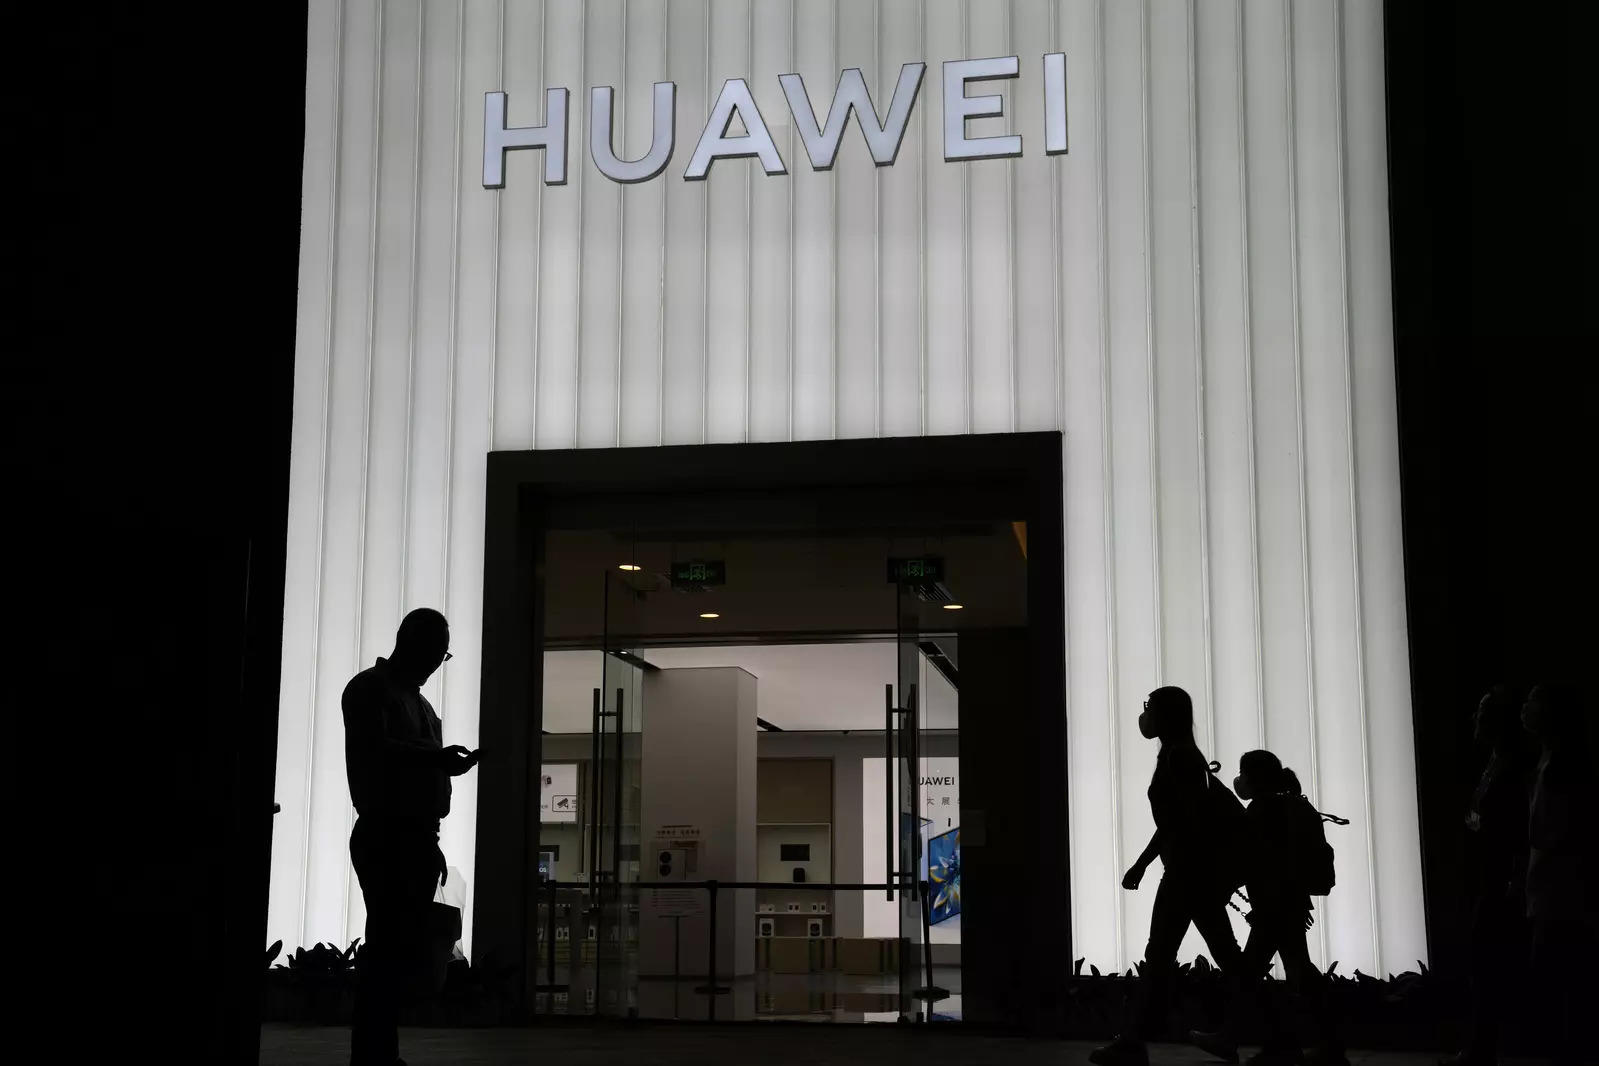 China's Huawei slows its long decline under U.S. sanctions as revenues improve